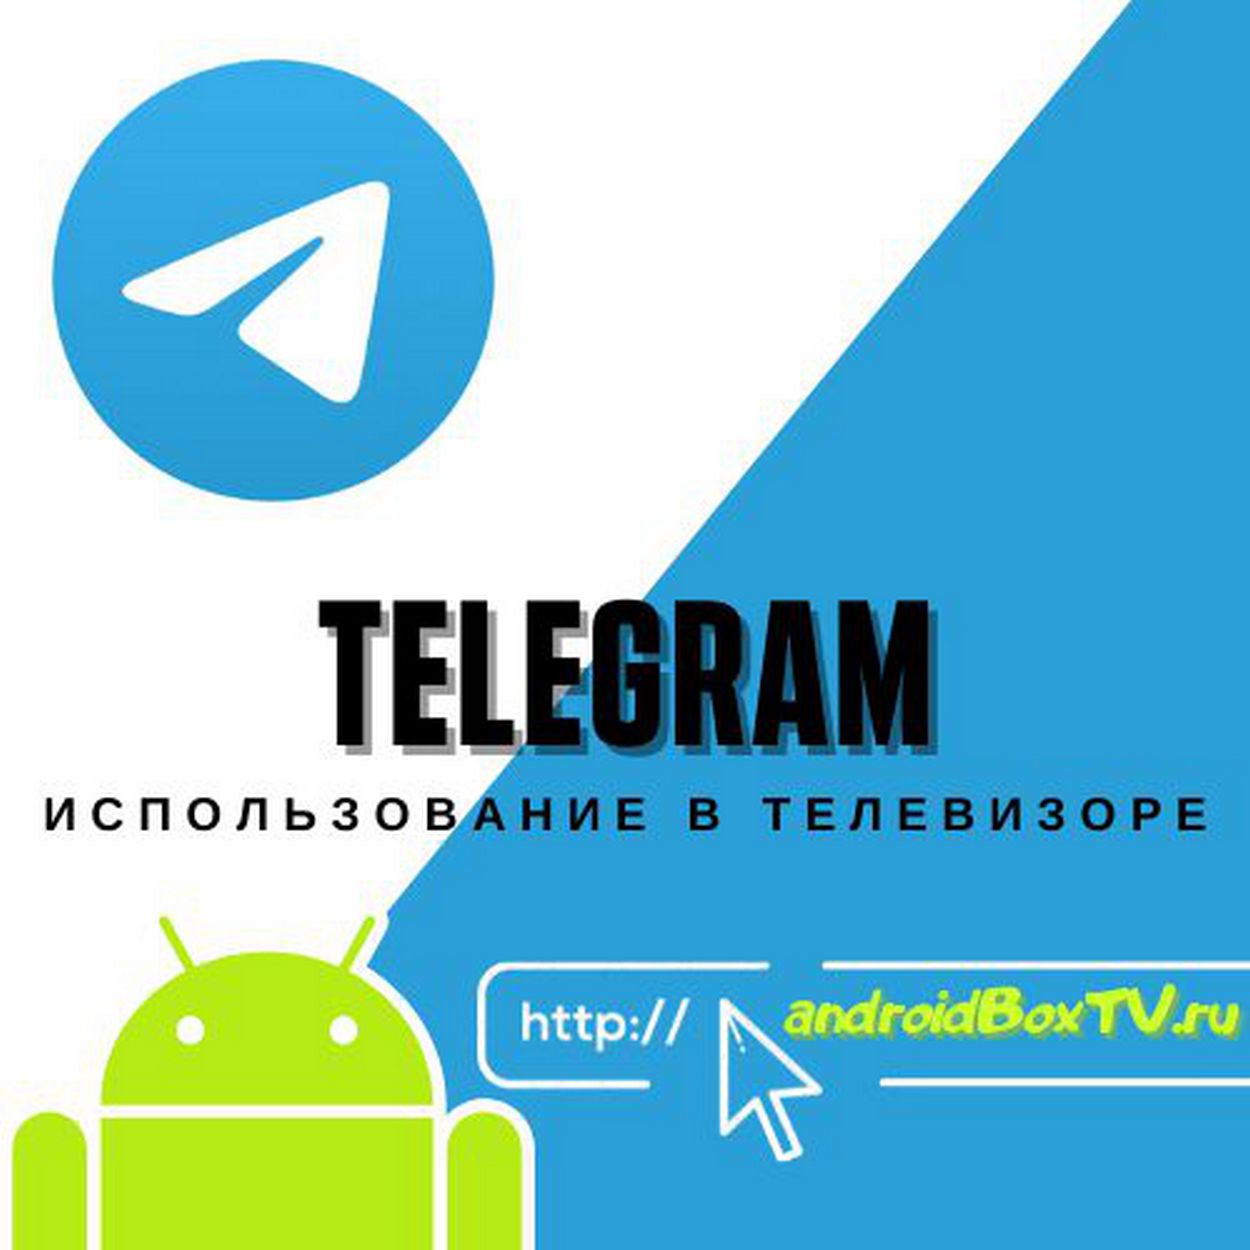 Как скачать телеграмм на телевизор андроид (120) фото